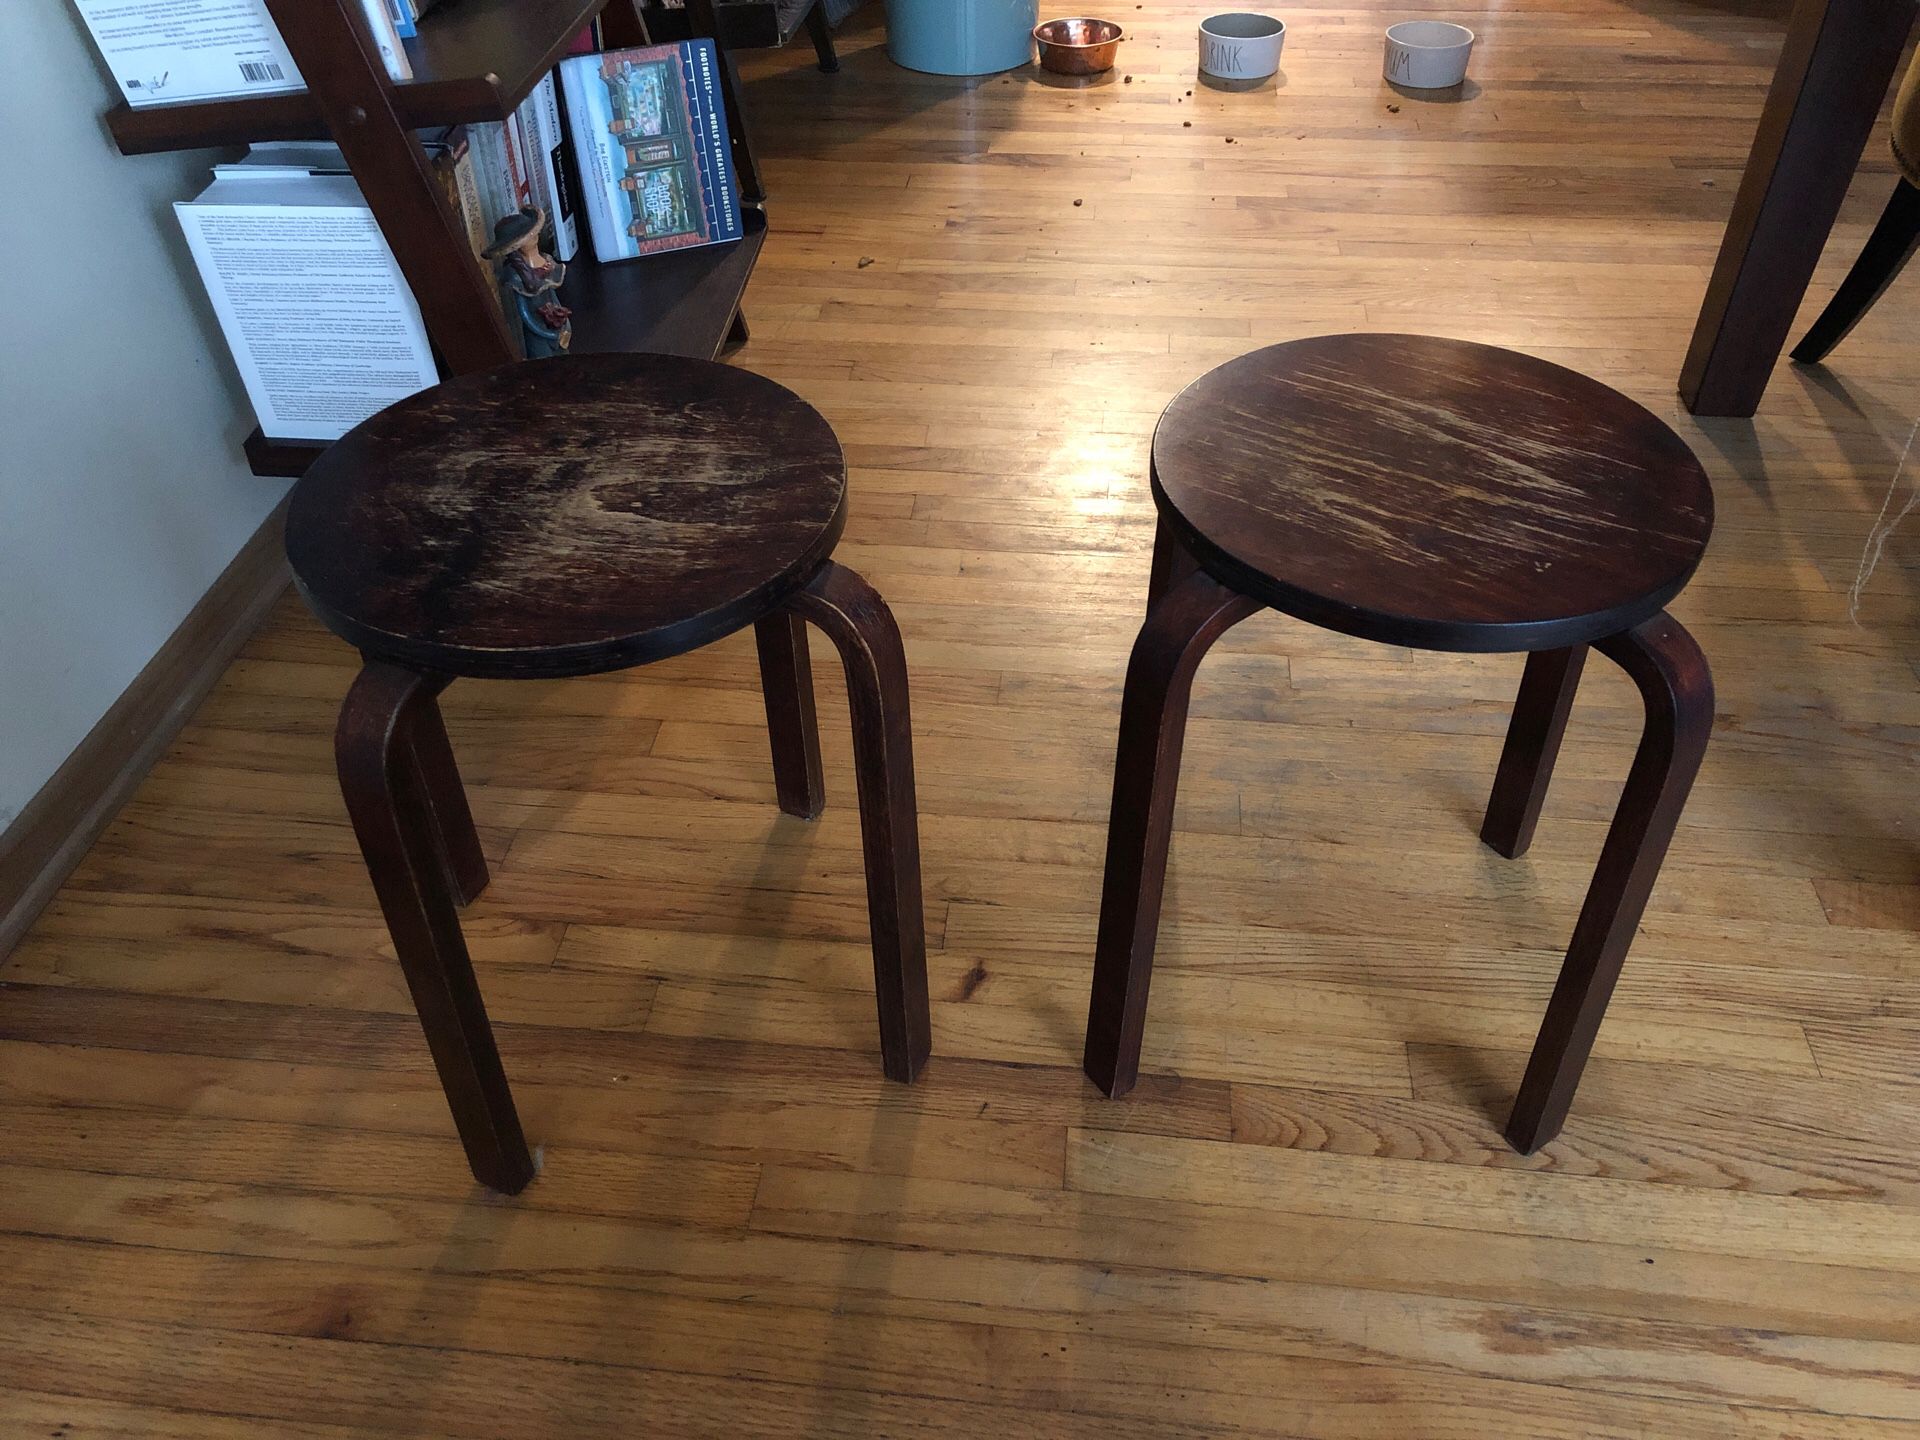 Target wooden stools